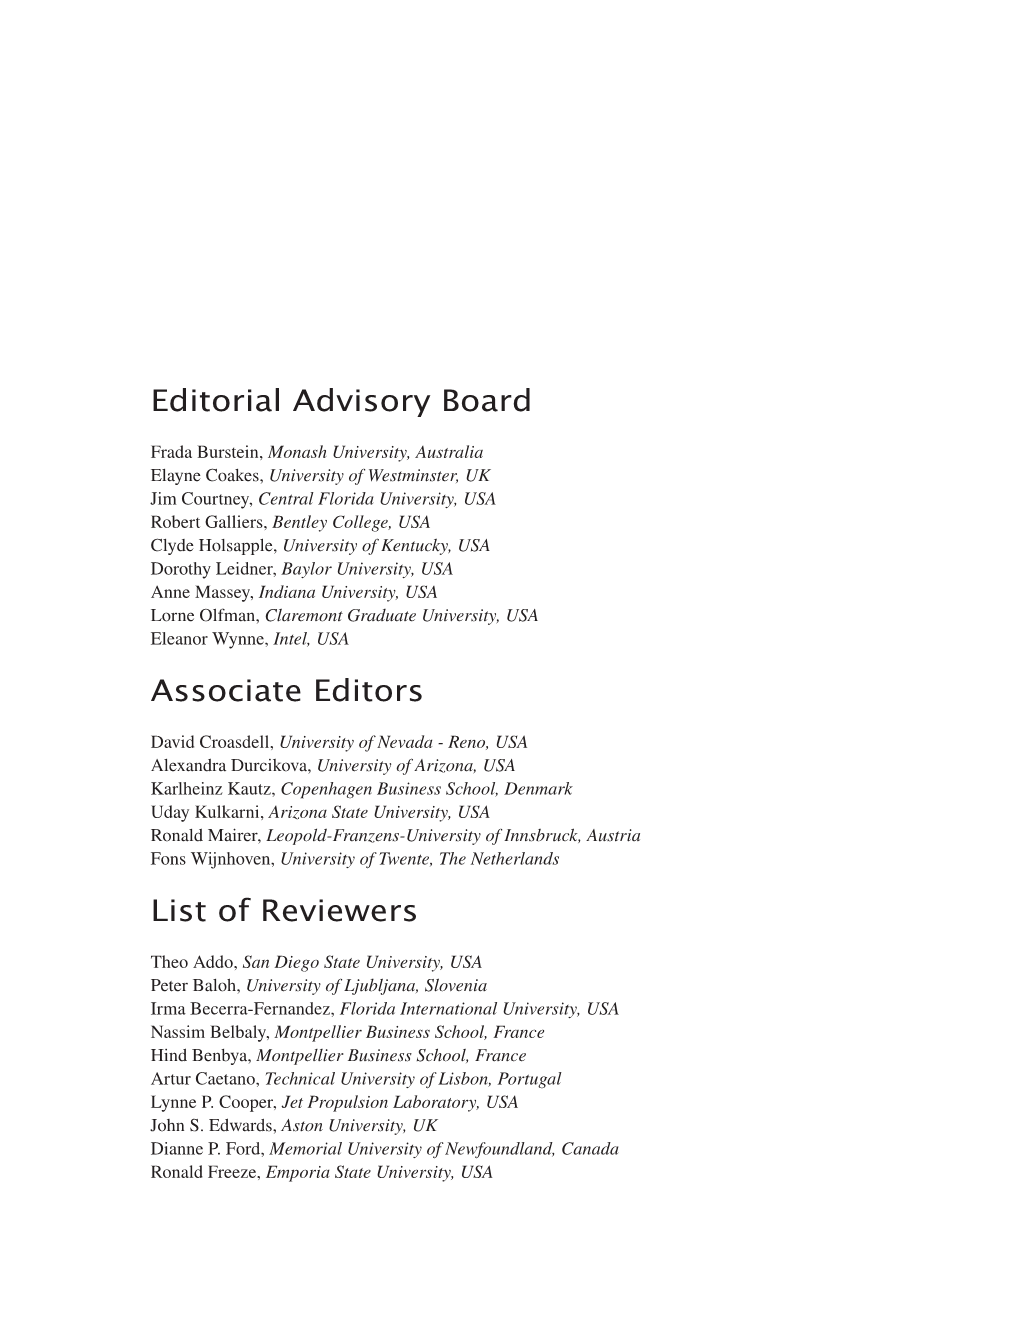 Editorial Advisory Board Associate Editors List of Reviewers